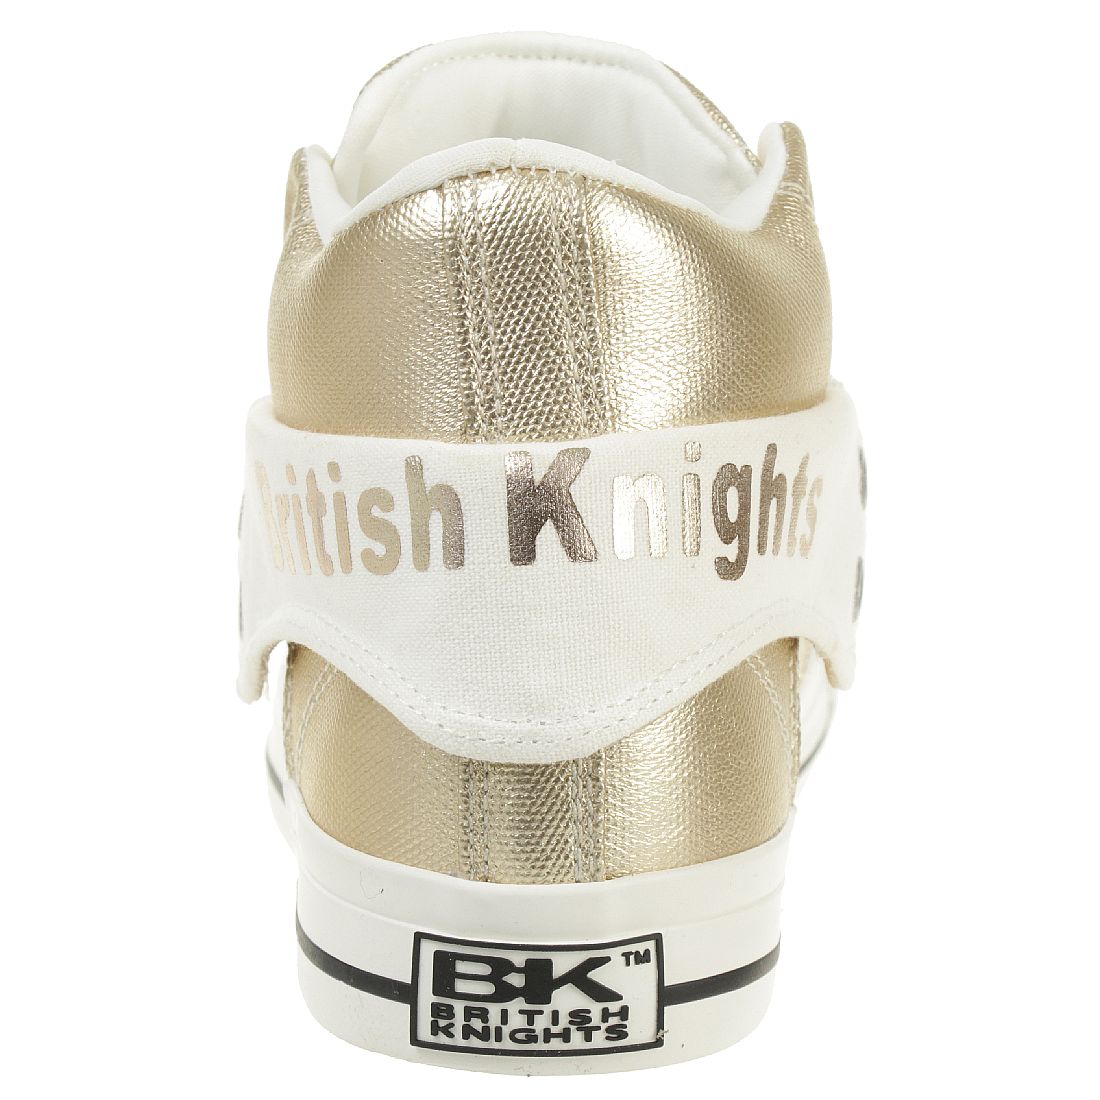 British Knights ROCO Metallic BK Damen Sneaker B43-3706-03 gold metallic Textil